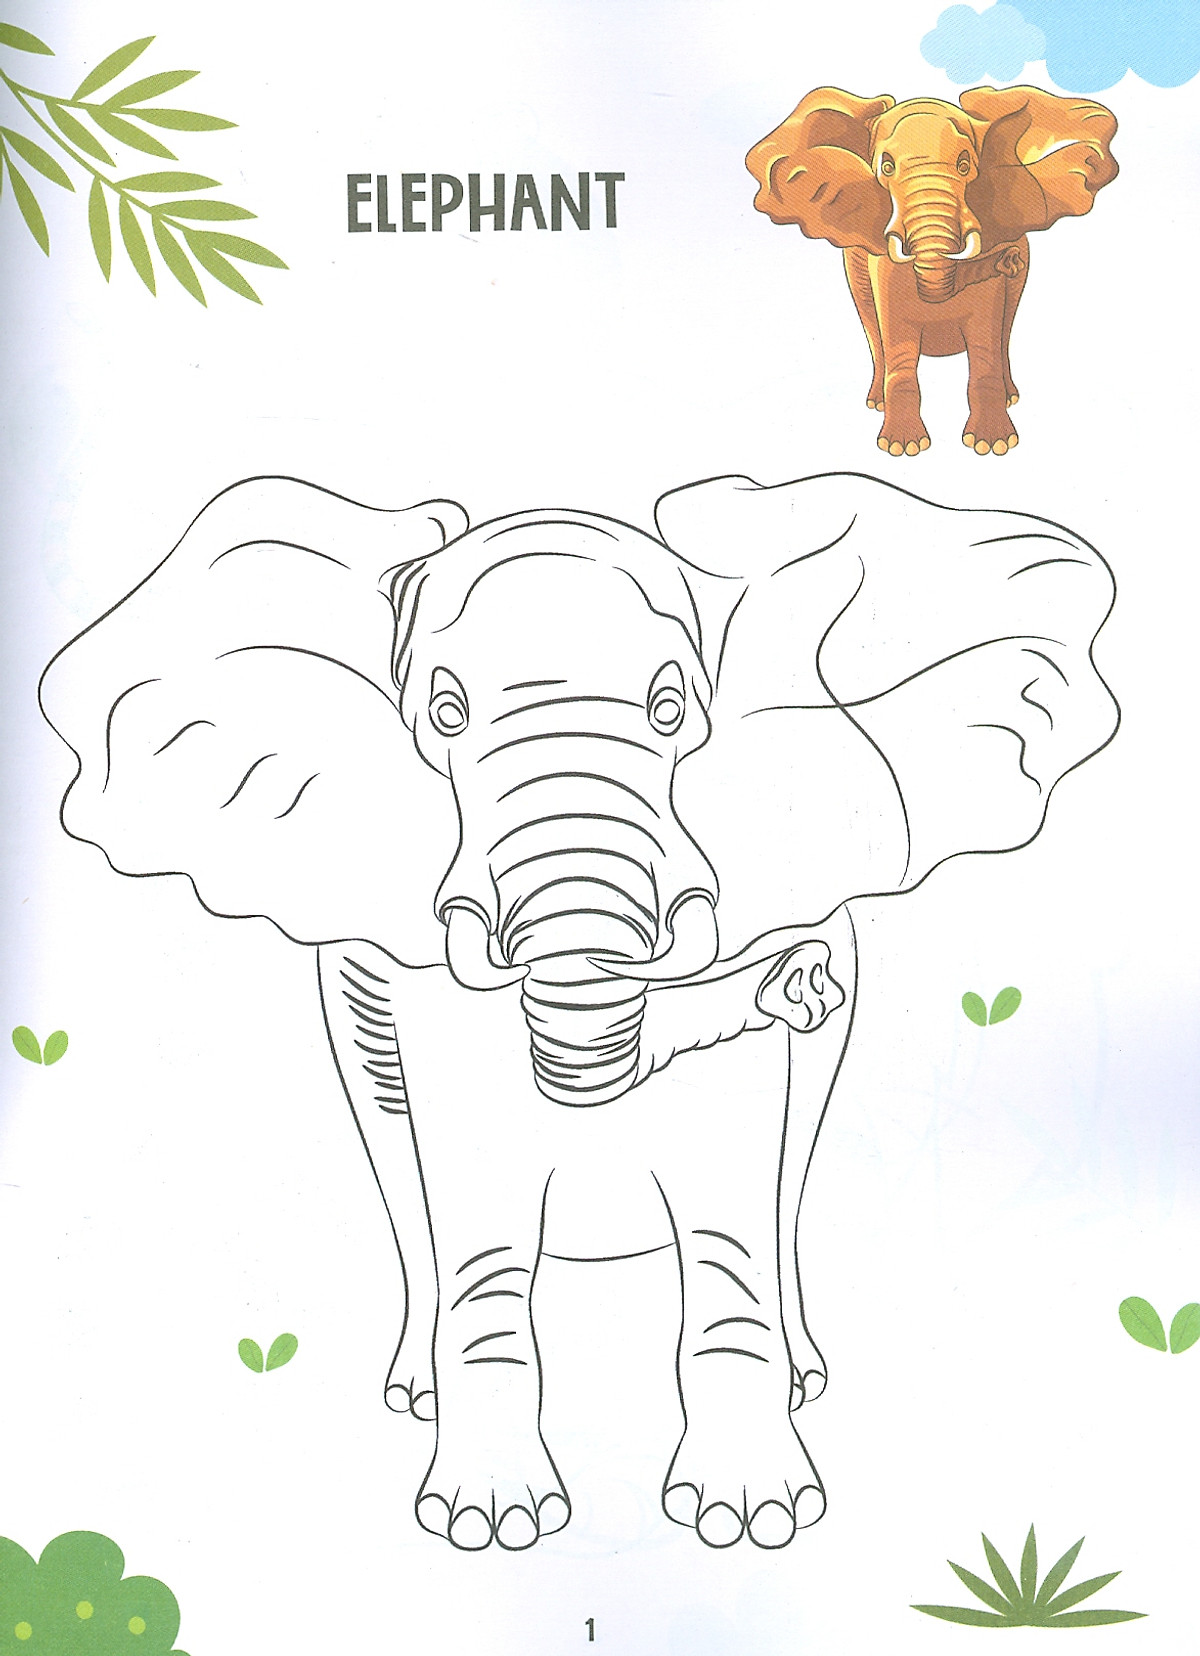 Wild Animals Colouring Book – Monkey Pen Store